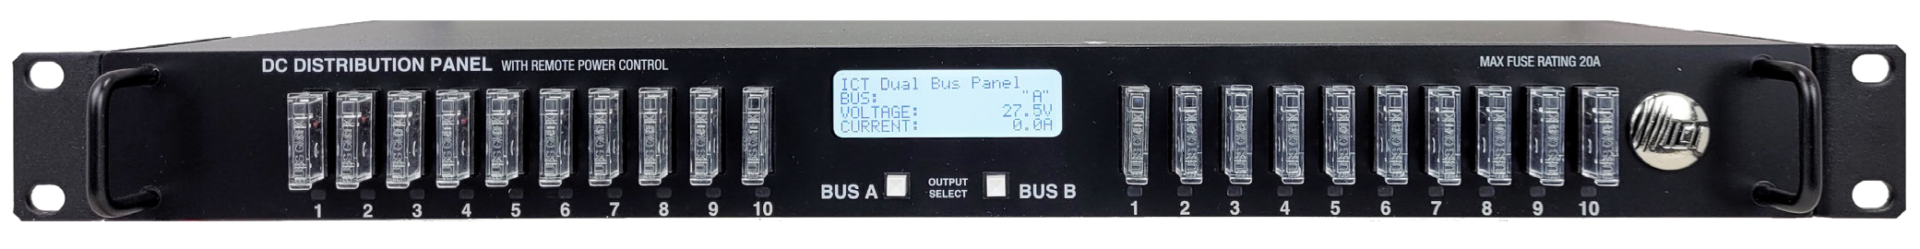 ict distribution series3 10 10gmt fuse panel